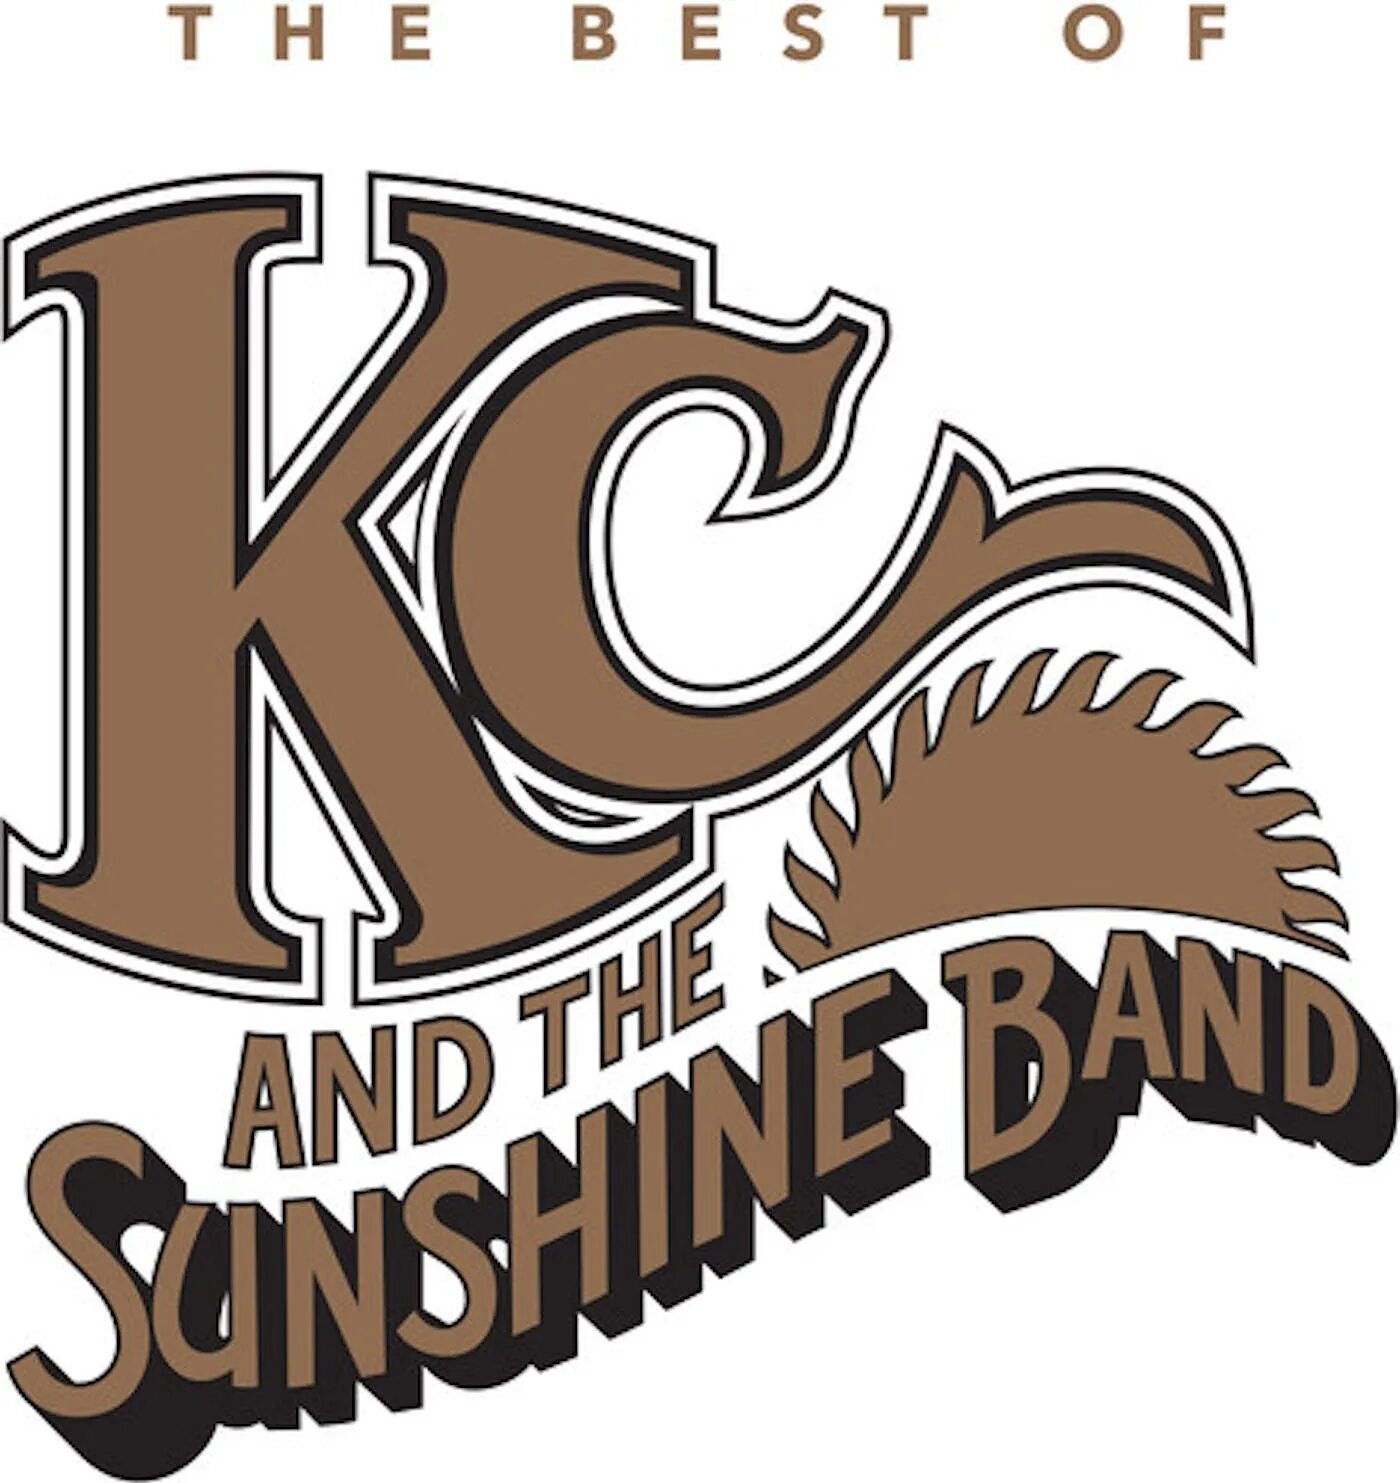 Группа Kc and the Sunshine Band. Kc and the Sunshine Band Kc and the Sunshine Band. Kc & the Sunshine Band - the best of. Картинки Kc s the Sunshine Band the best of. Arms around me